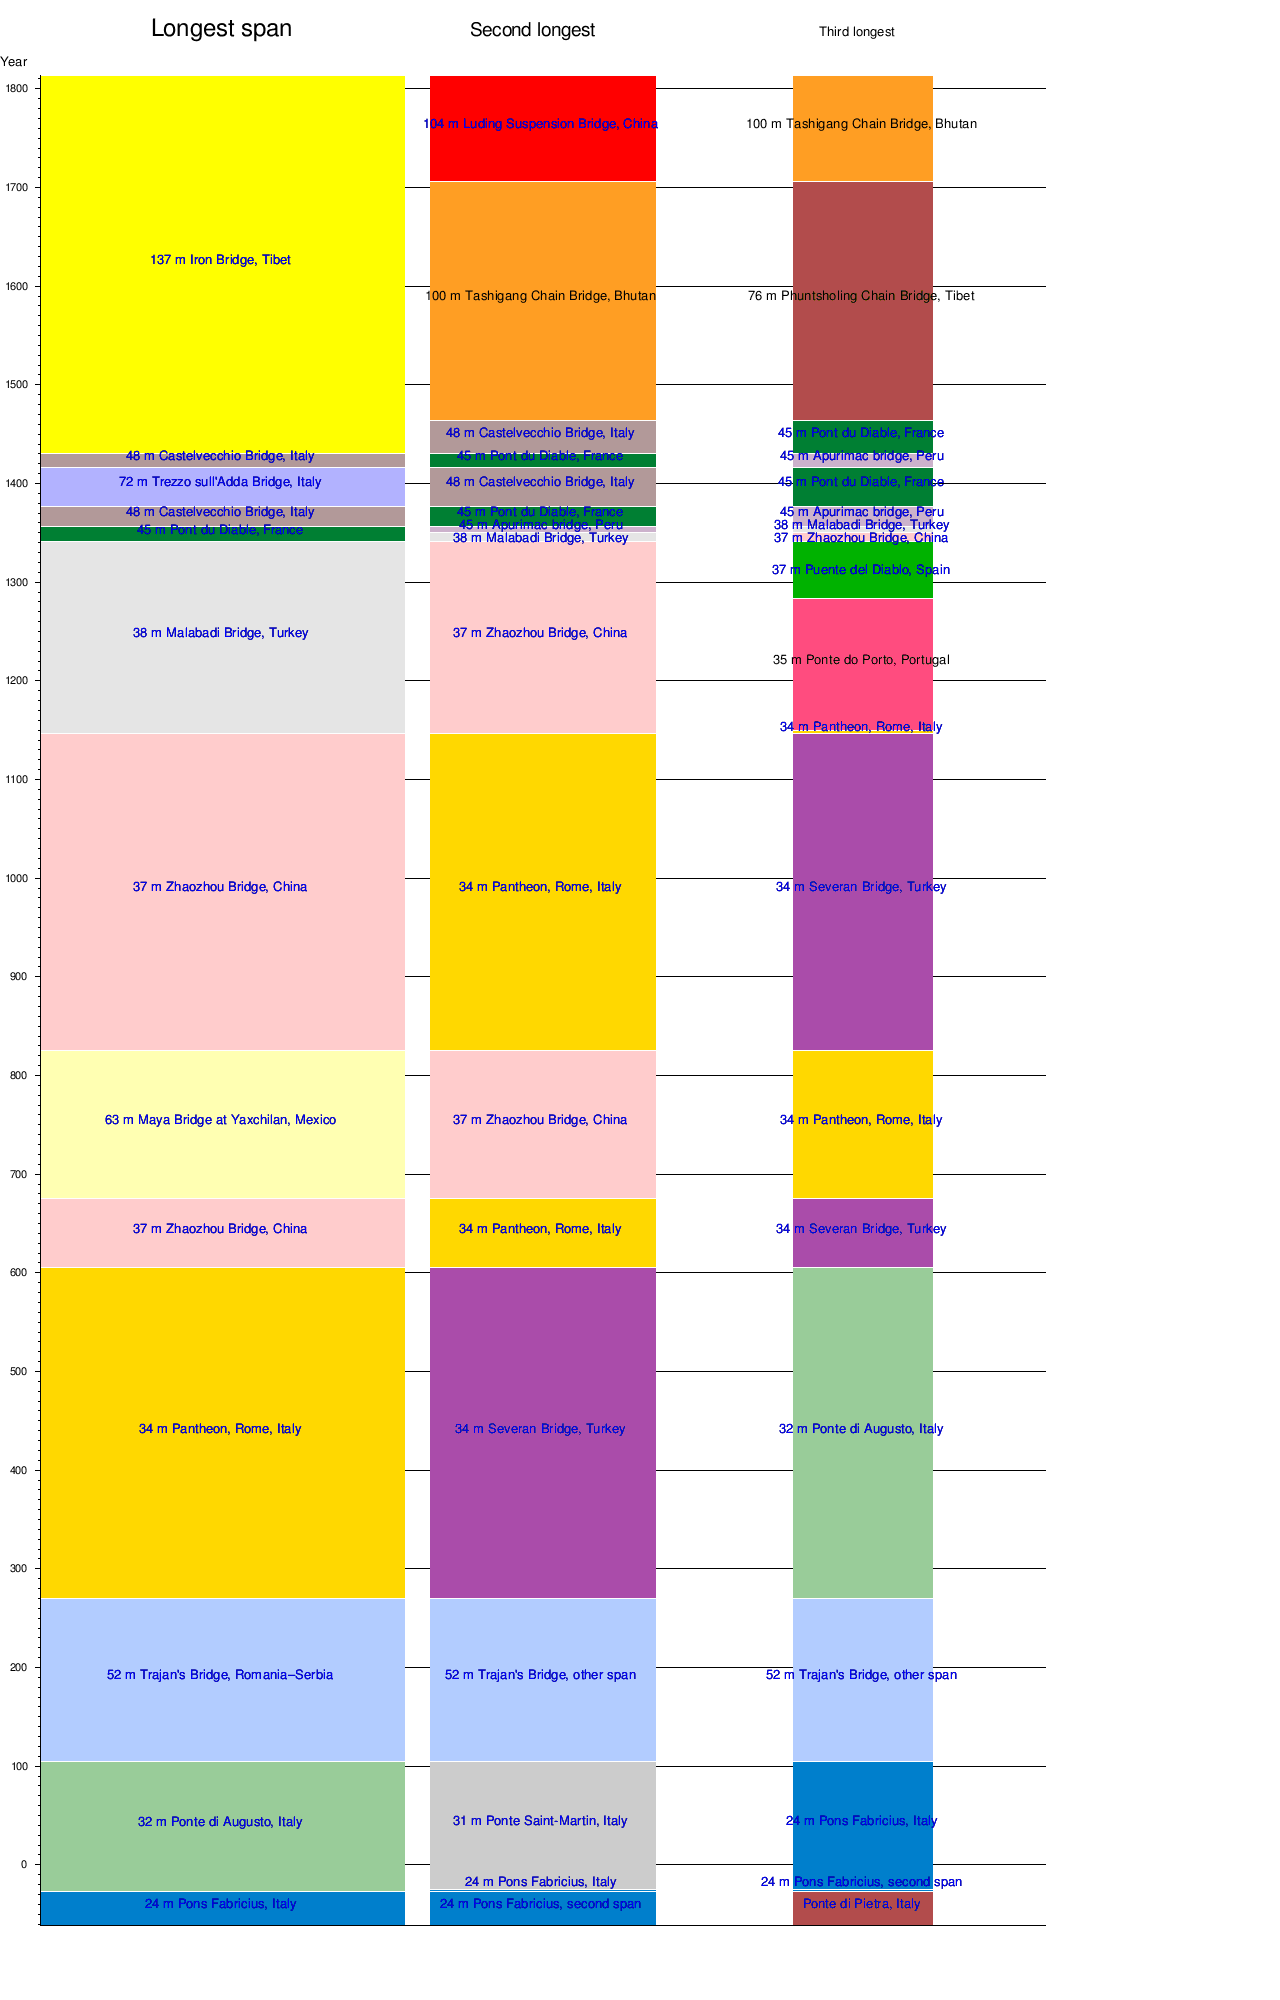 Timeline of three longest spans